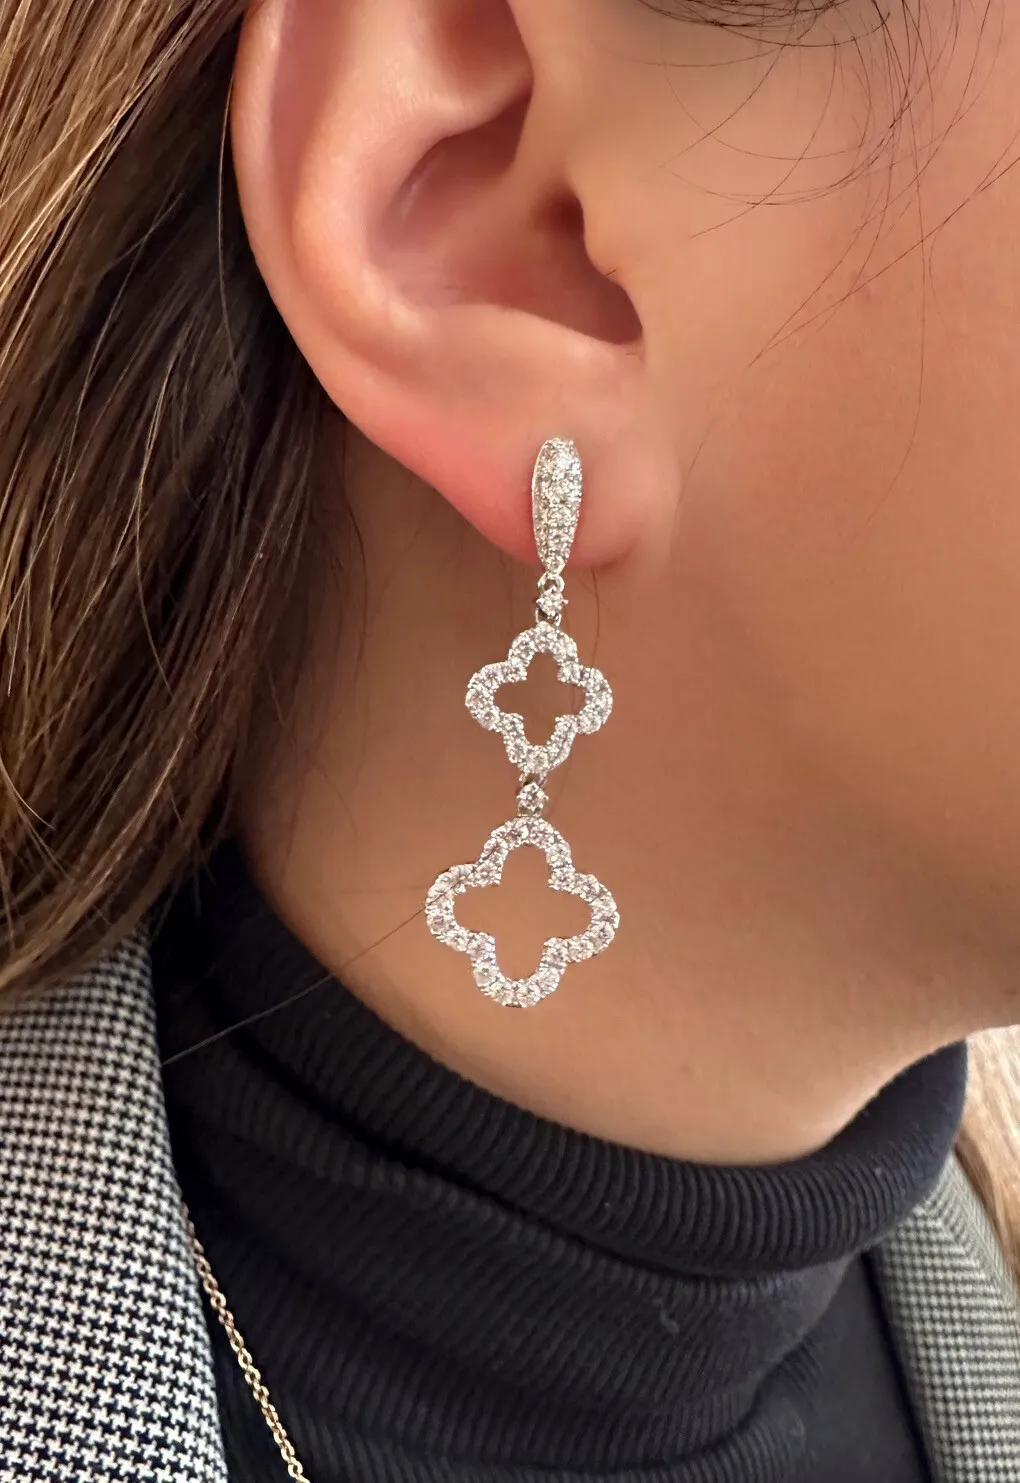 Women's Diamond Clover Drop Earrings 3.44 Carat Total Weight in 18k White Gold For Sale